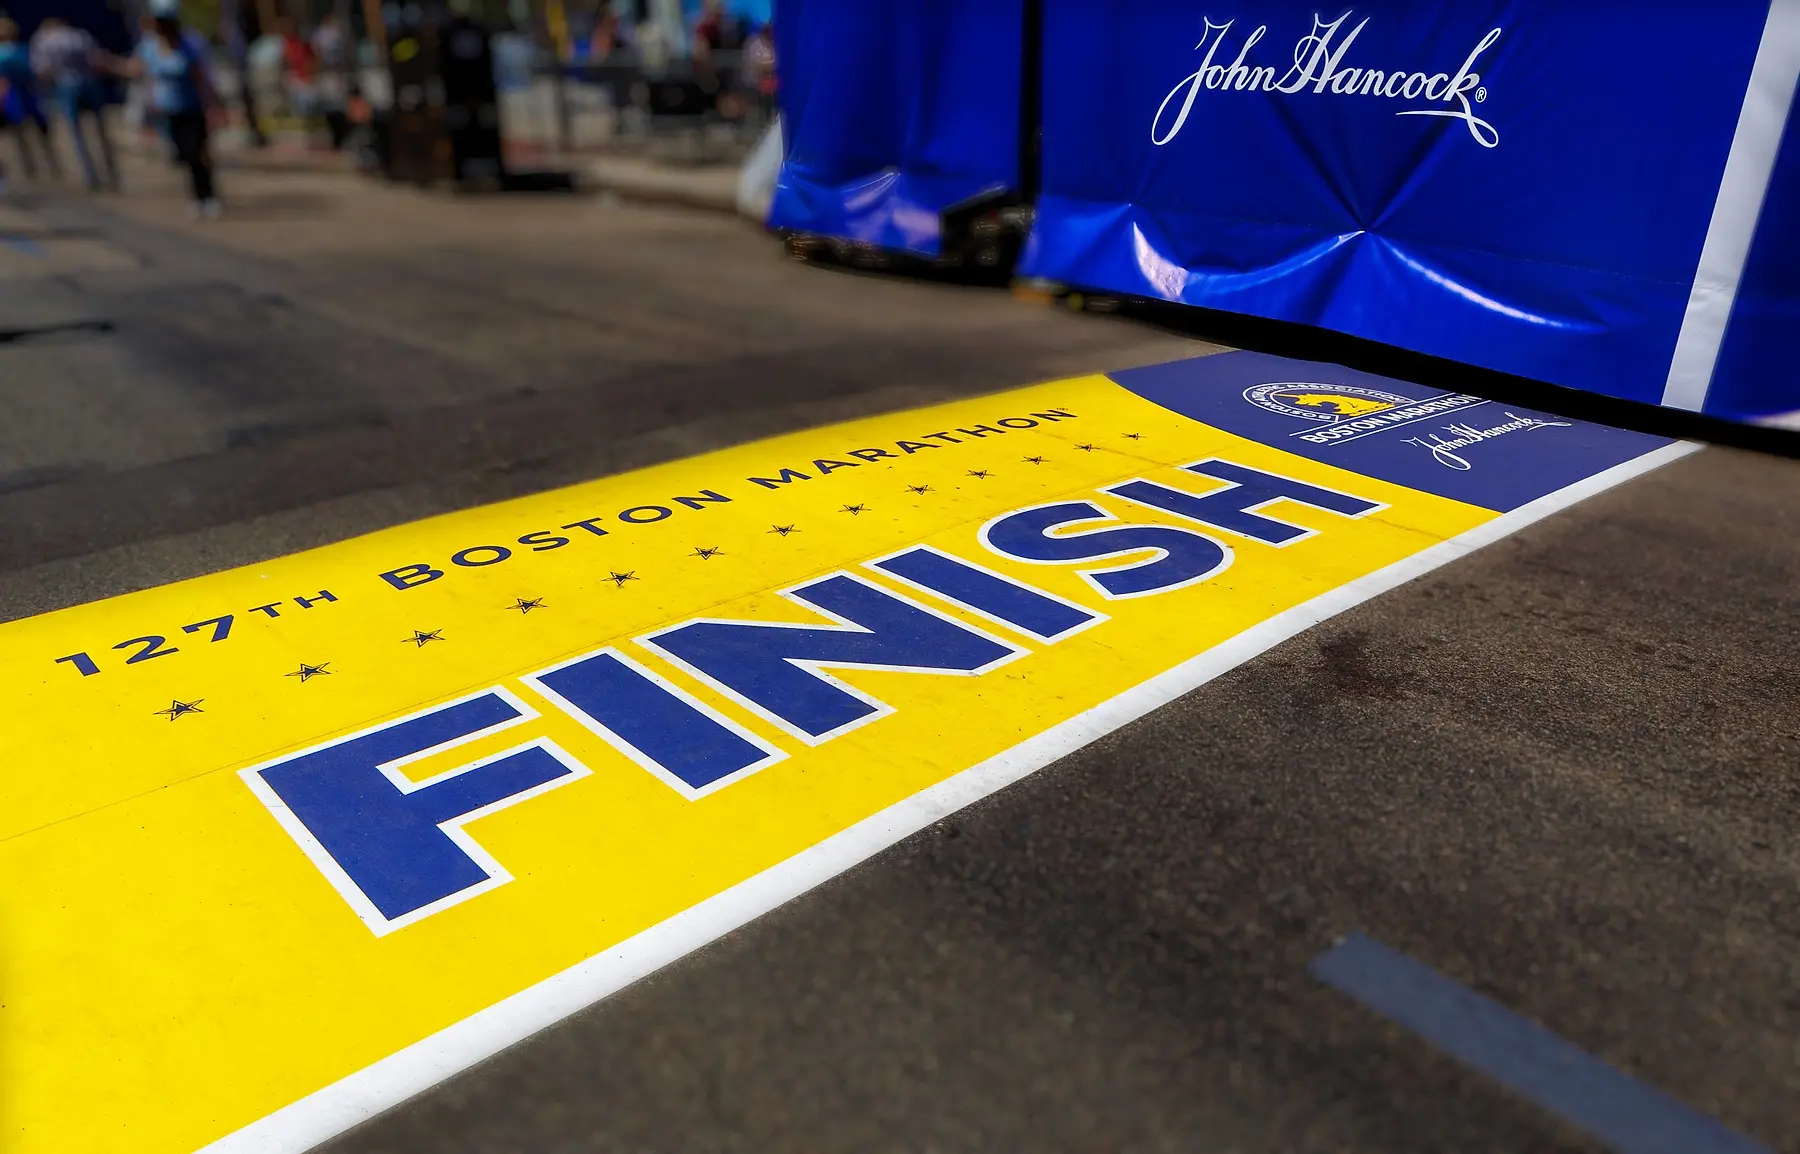 History of the Boston Marathon finish line